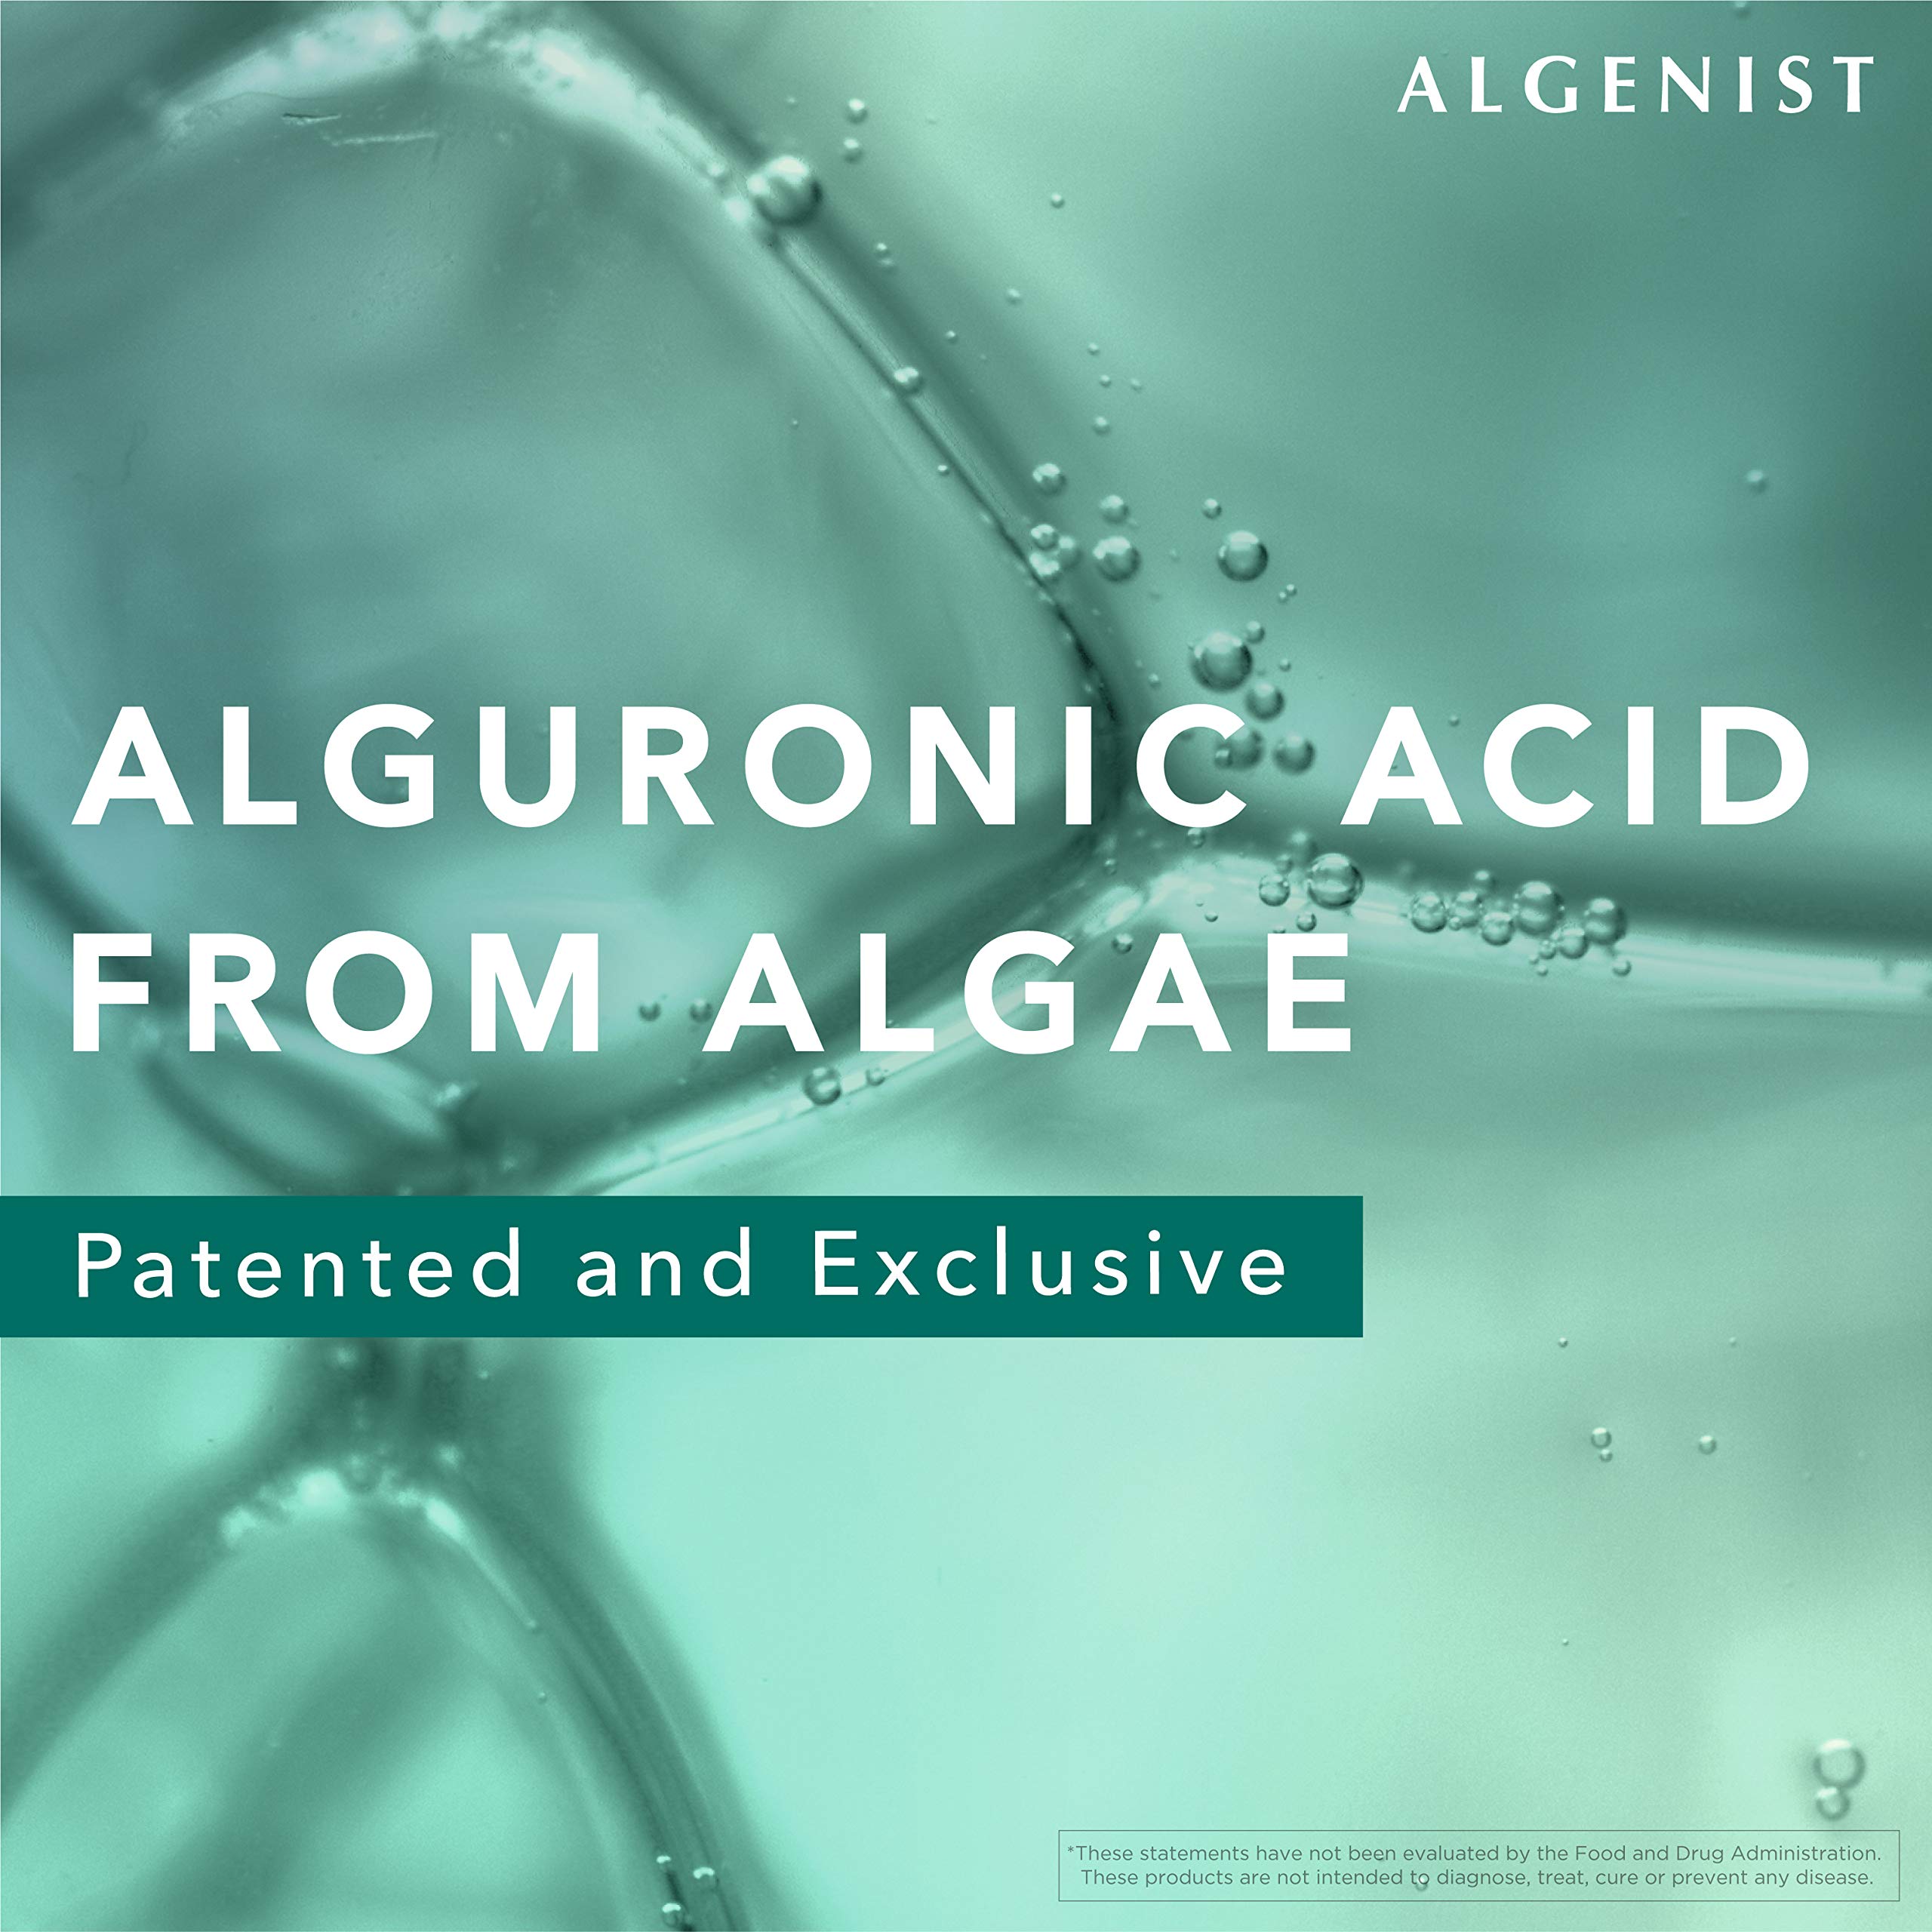 Algenist ELEVATE Advanced Retinol Serum - Encapsulated Retinol to Help Visibly Smooth, Tone & Improve Radiance & Firmness - Gentle Daily Formula with Algae & Peptides